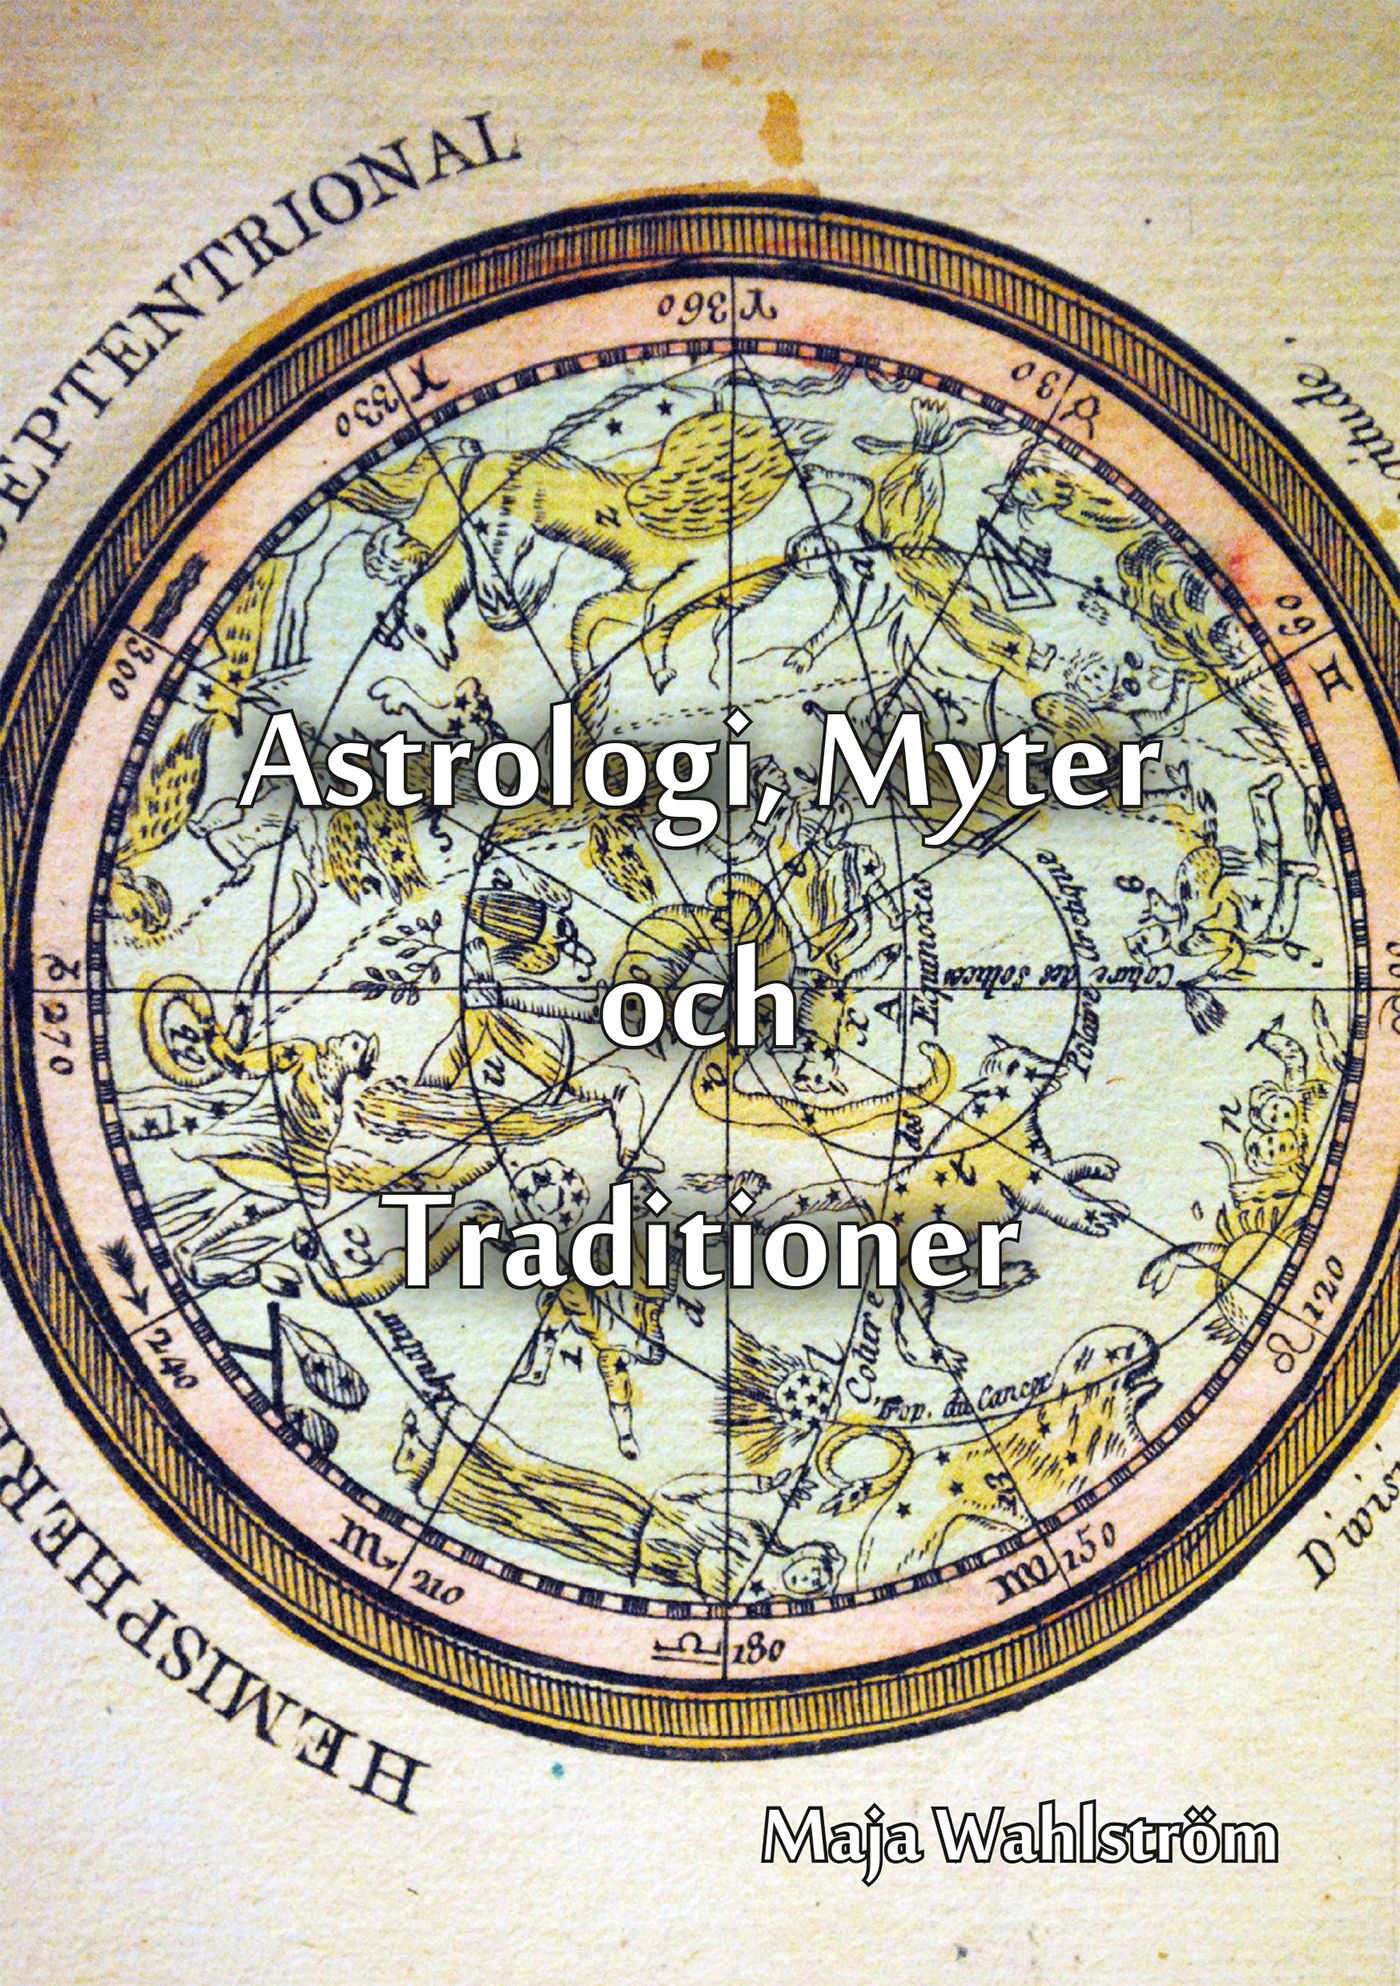 Astrologi, Myter och Traditioner, e-bog af Maja Wahlström